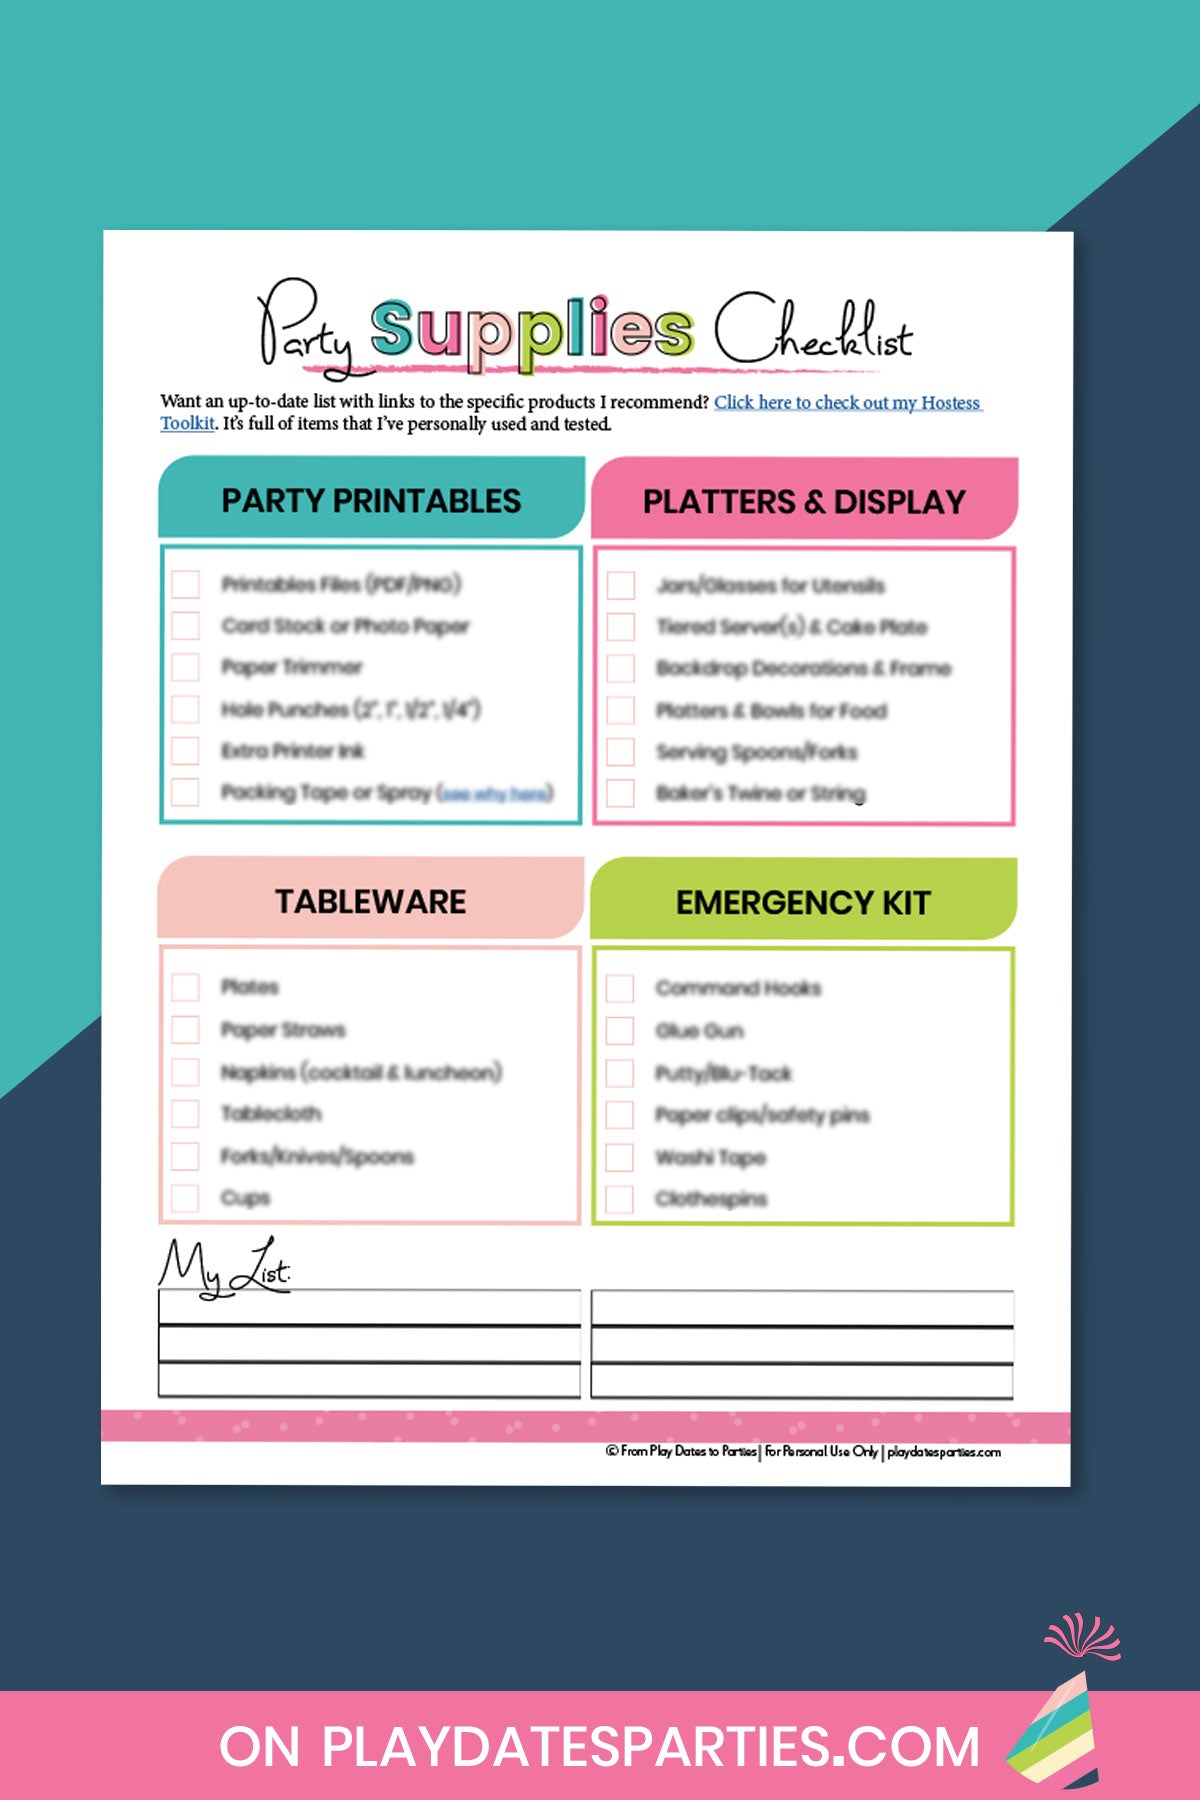 Party Supplies Checklist